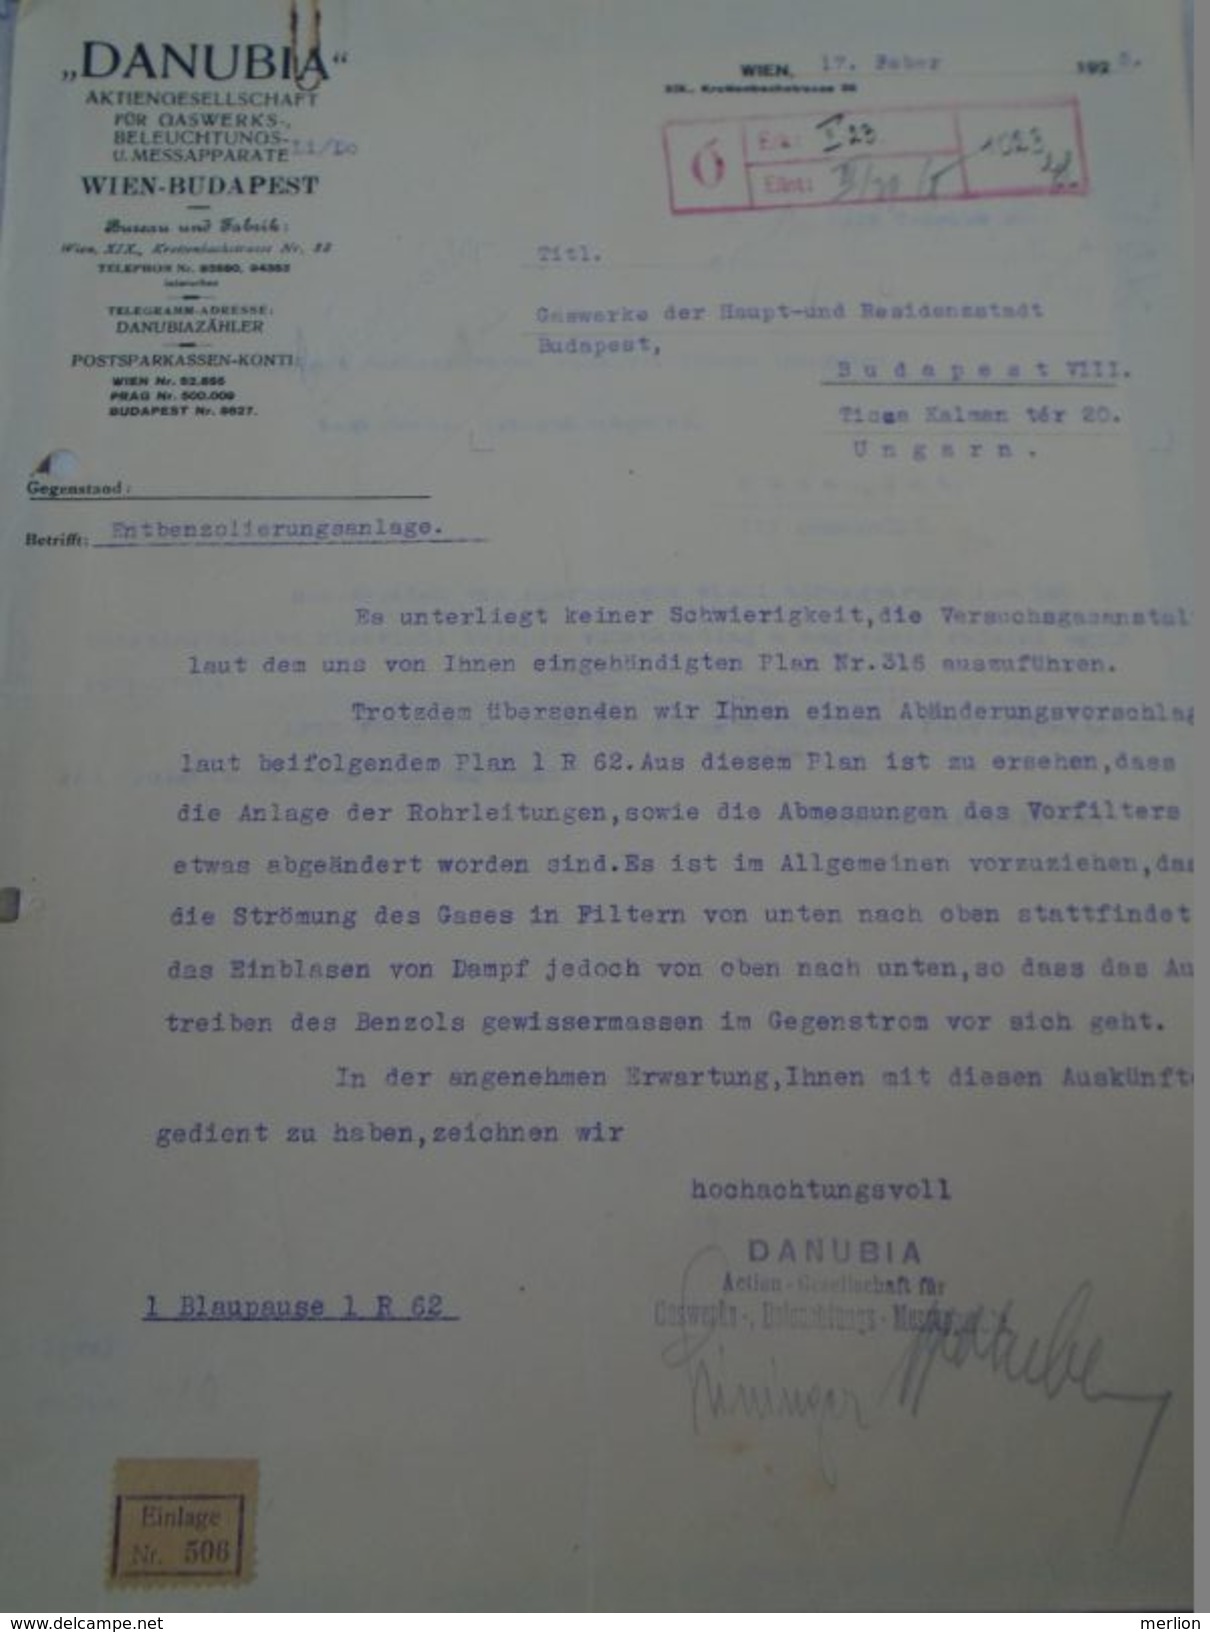 AD036.22 Old Letter   Austria -DANUBIA -WIEN-BUDAPEST -GASWERKS -1925 -Gaswerke Budapest - Österreich